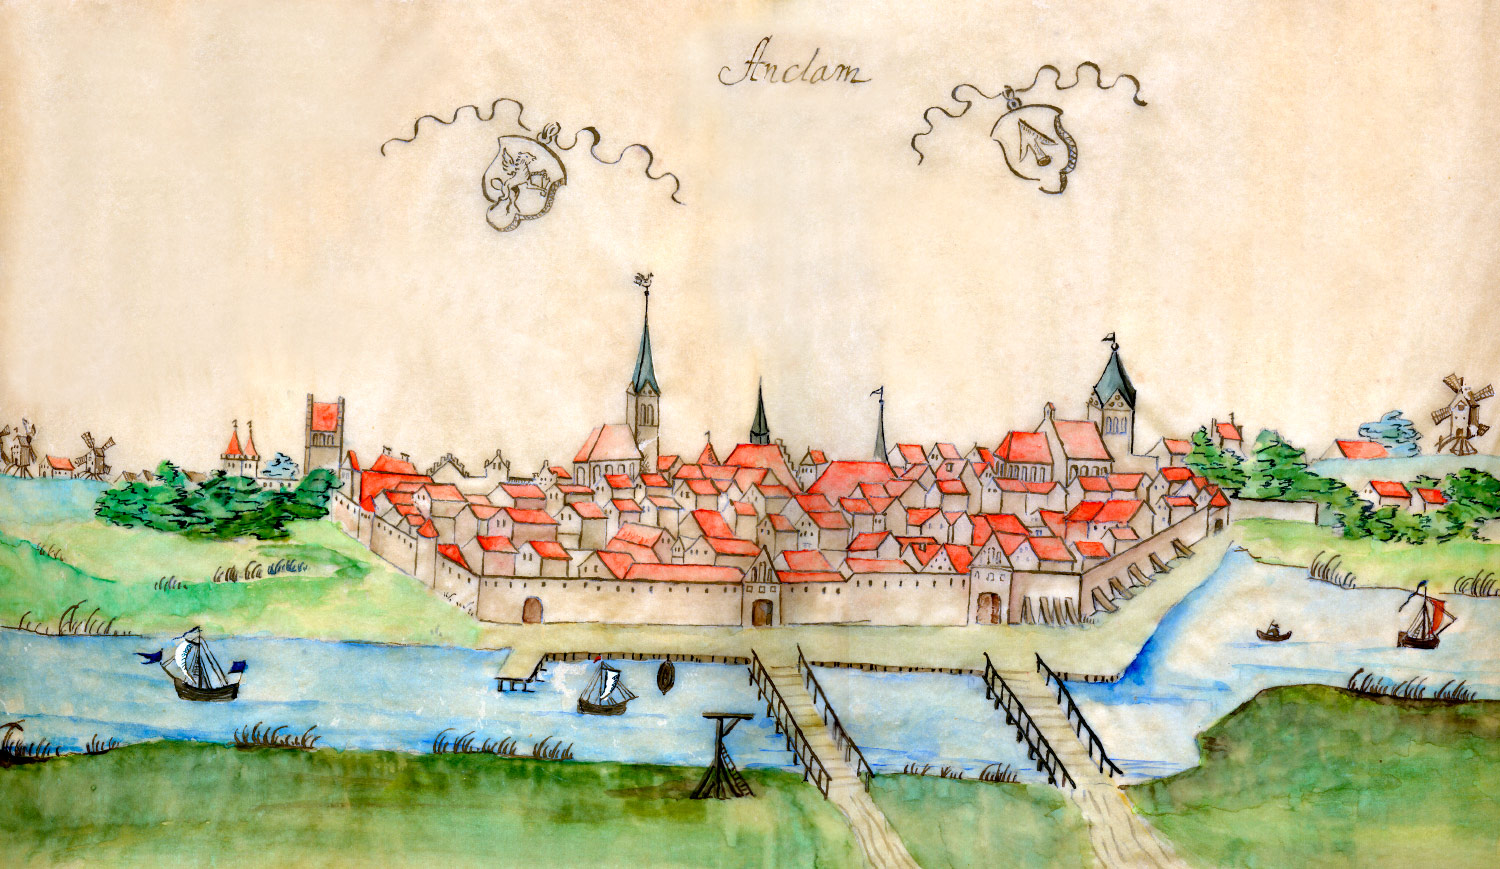 Anklam circa 1615, from the Stralsund illuminated manuscript, Stralsund city archive